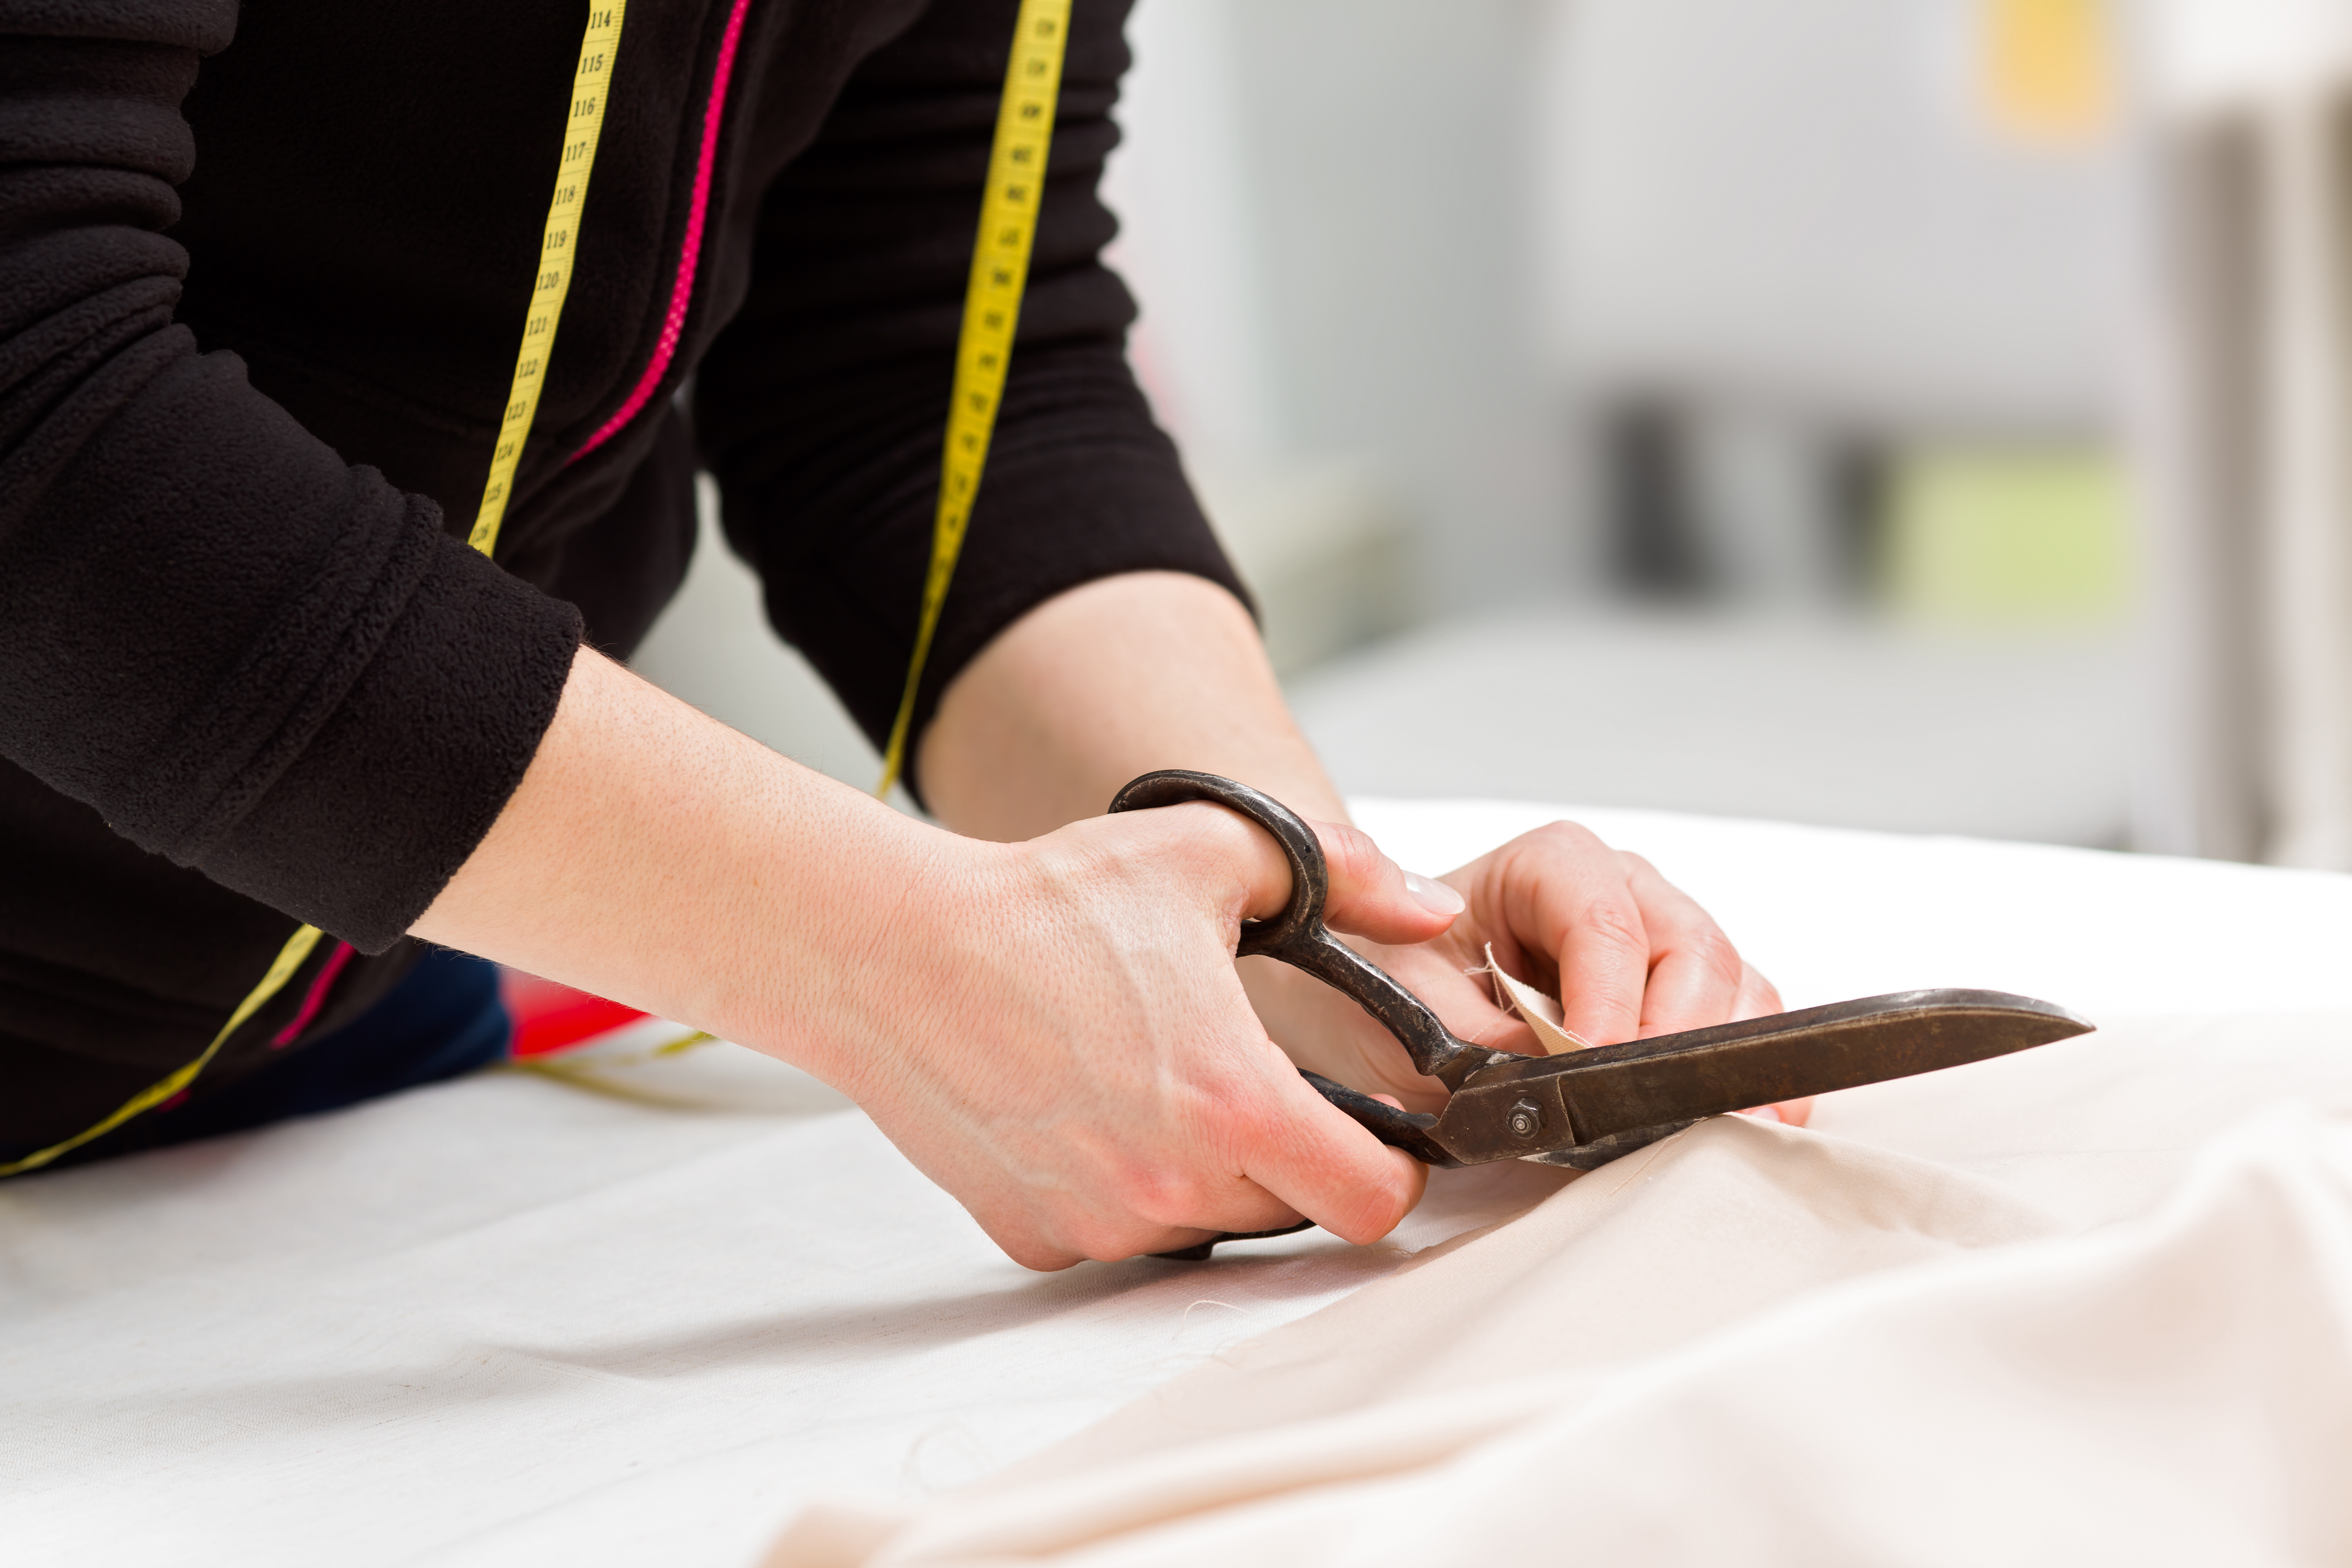 Dressmaker cutting fabric with scissors